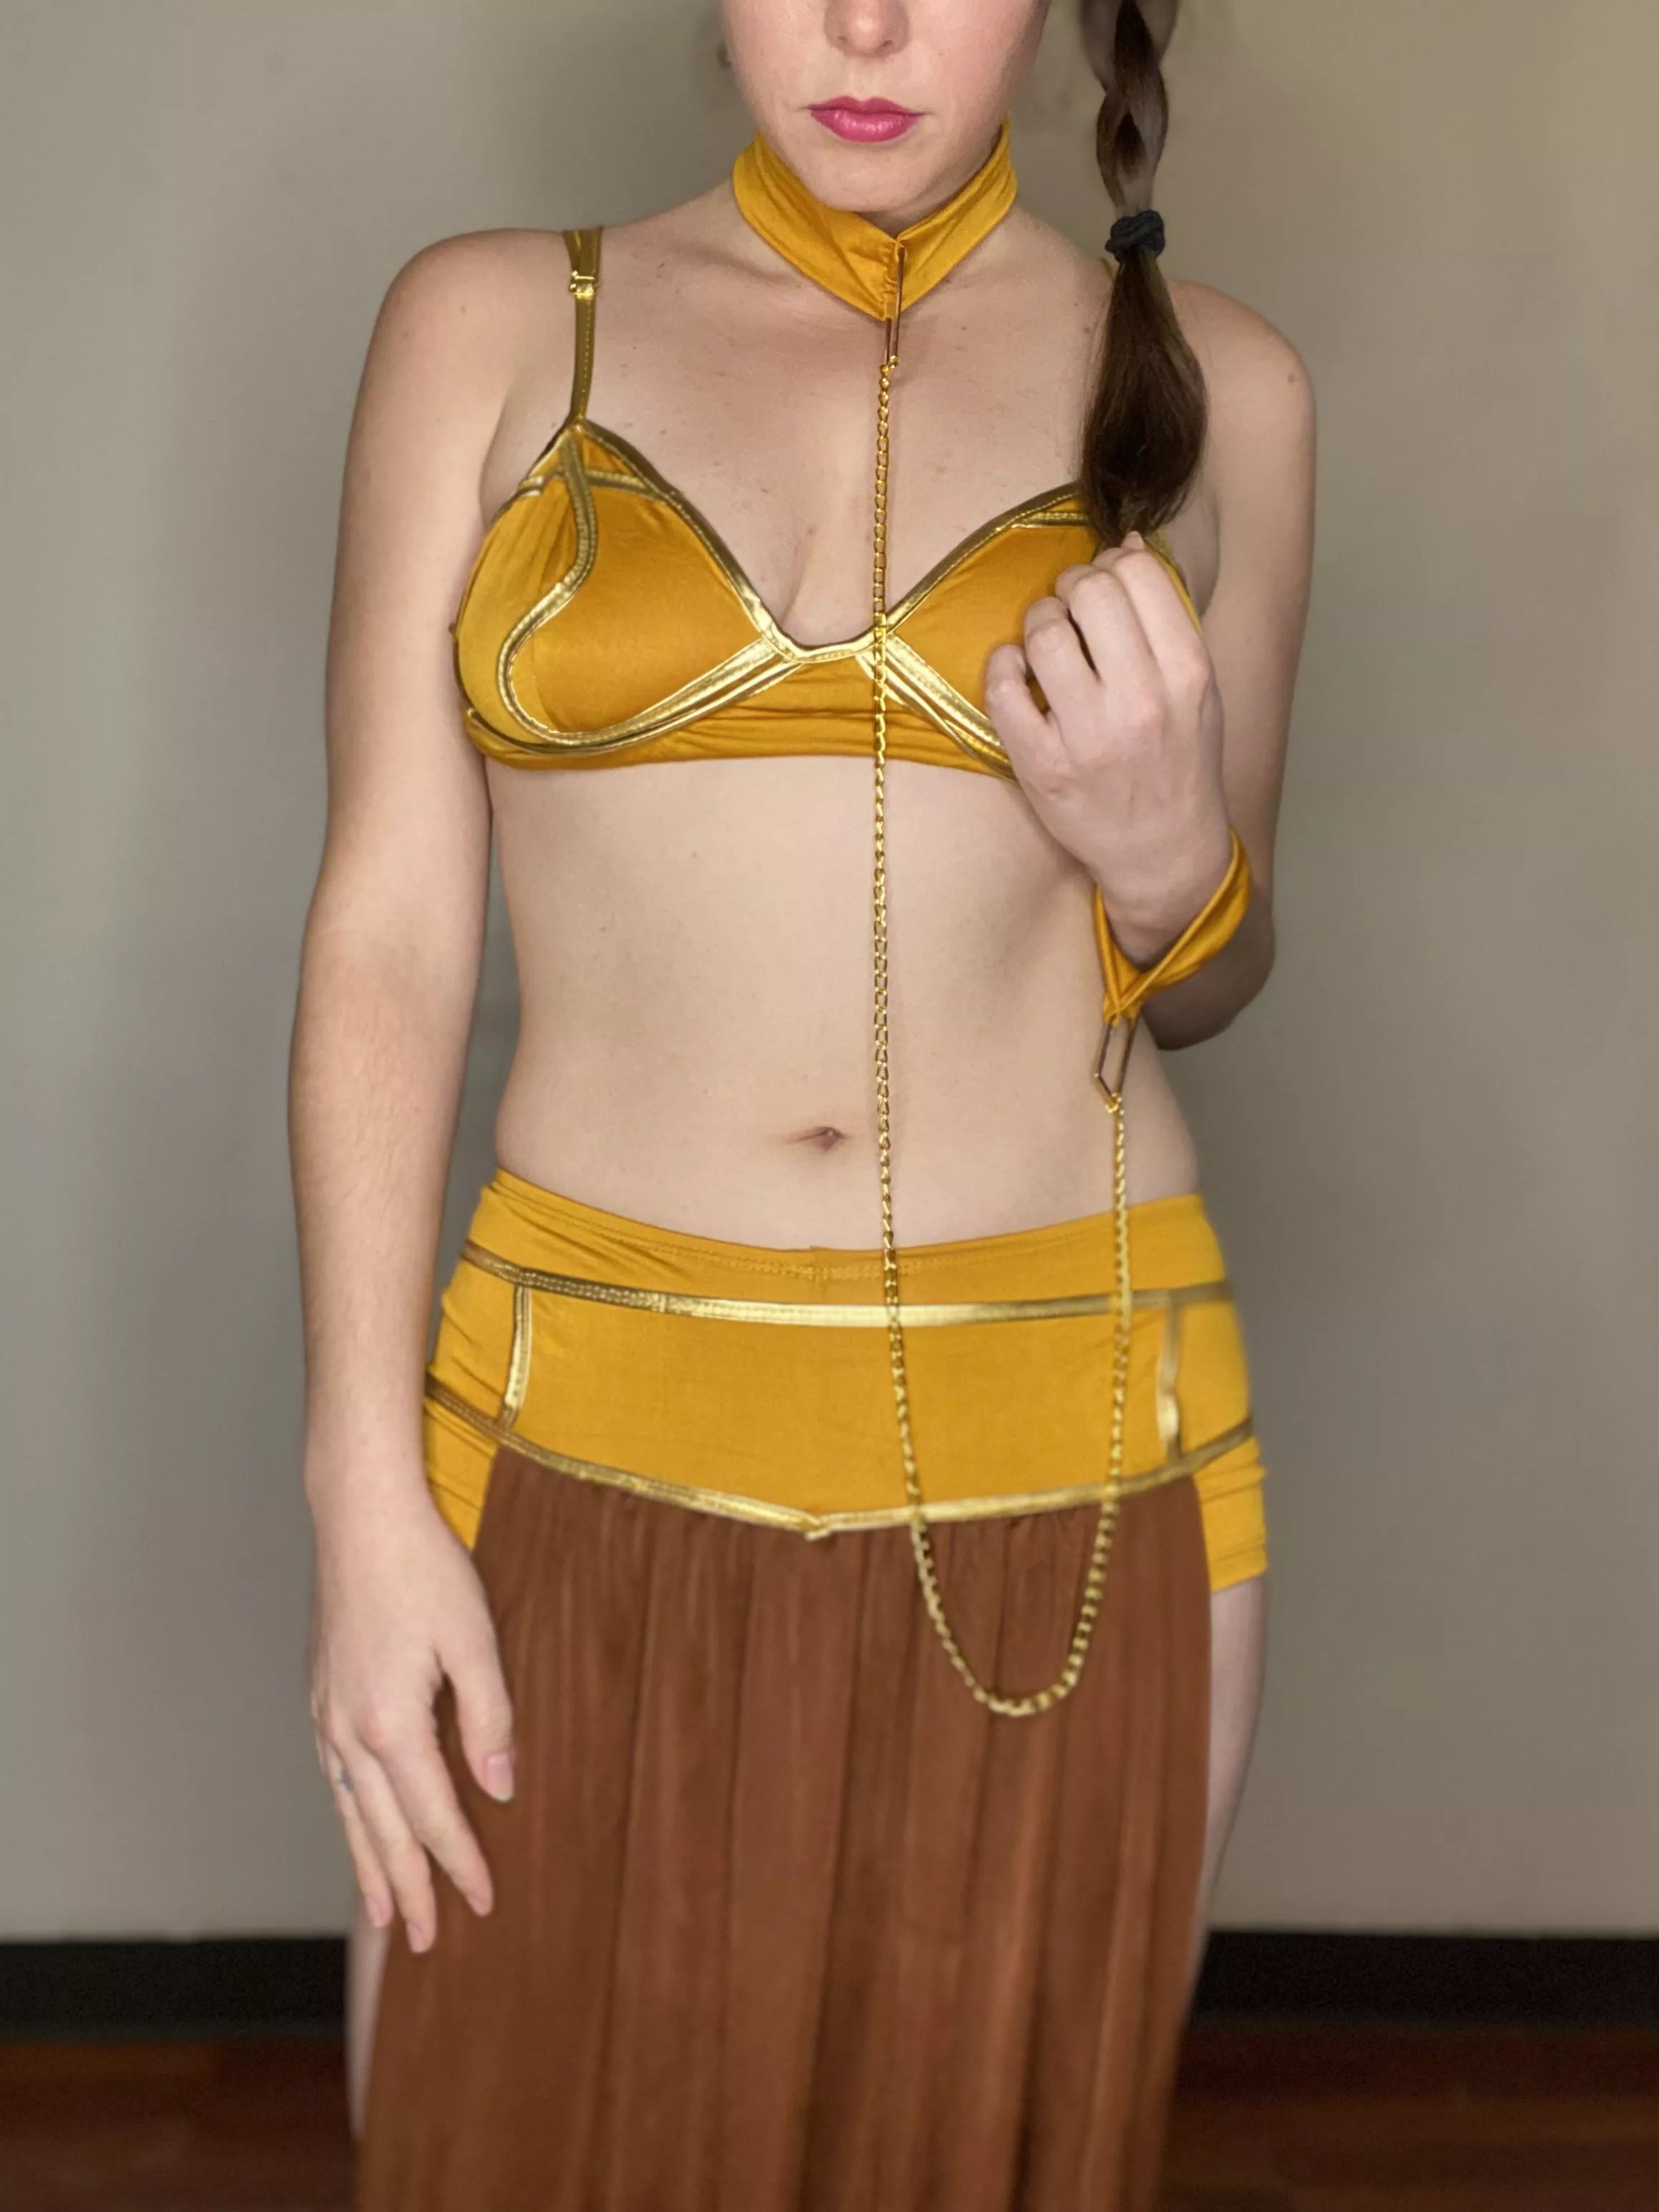 Kalinka Fox Princess Leia Slave Bikini Cosplay Leaked